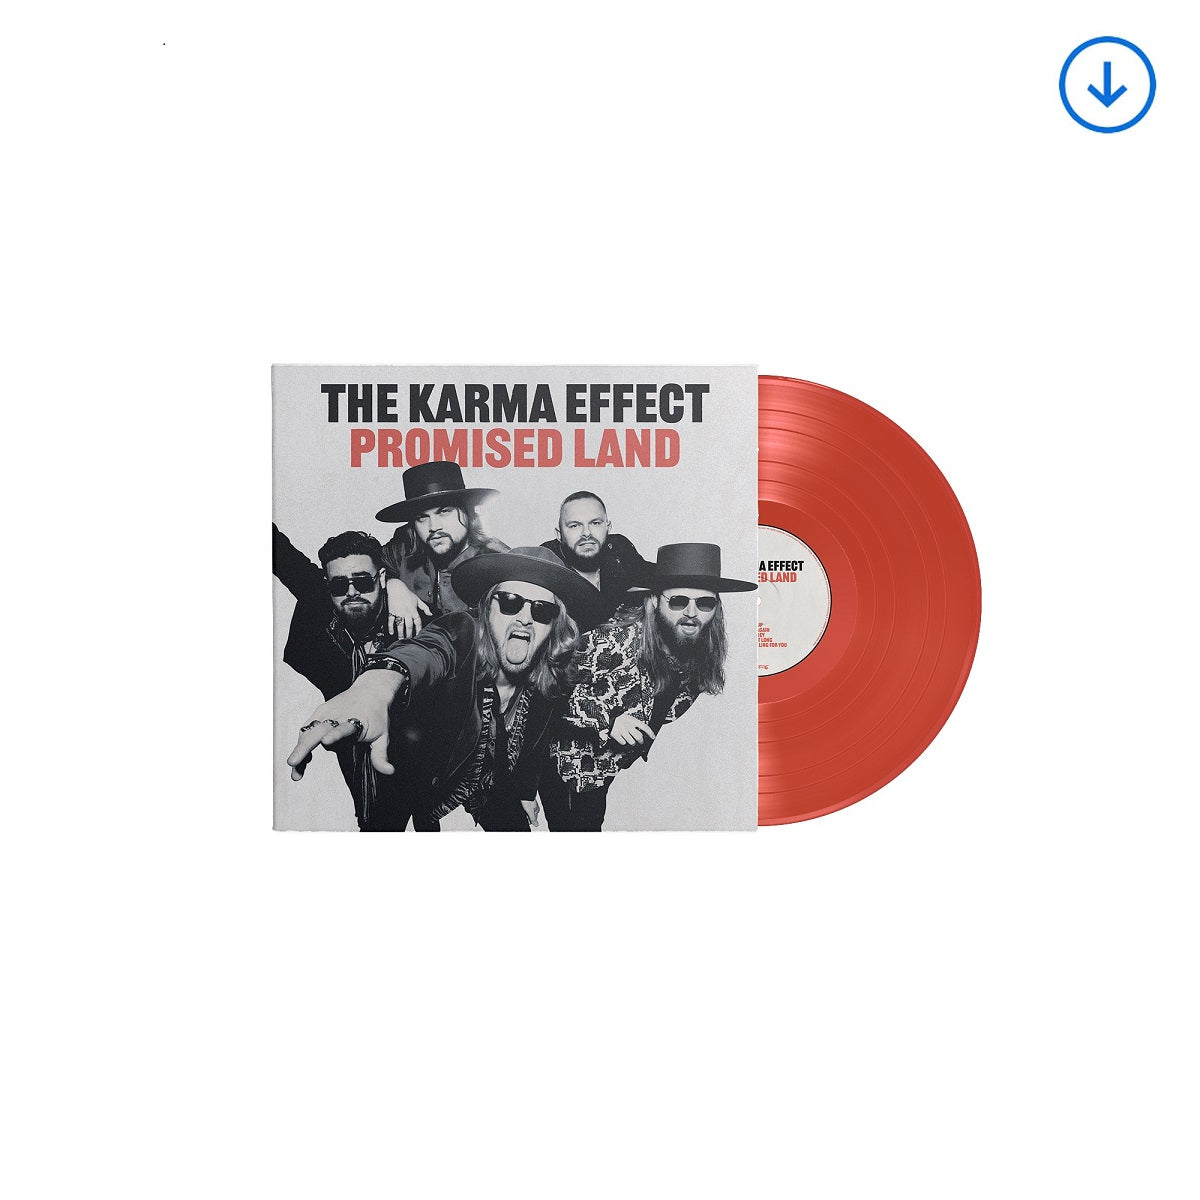 The Karma Effect "Promised Land" Orange Vinyl inc. Download (Ltd to 300 copies)